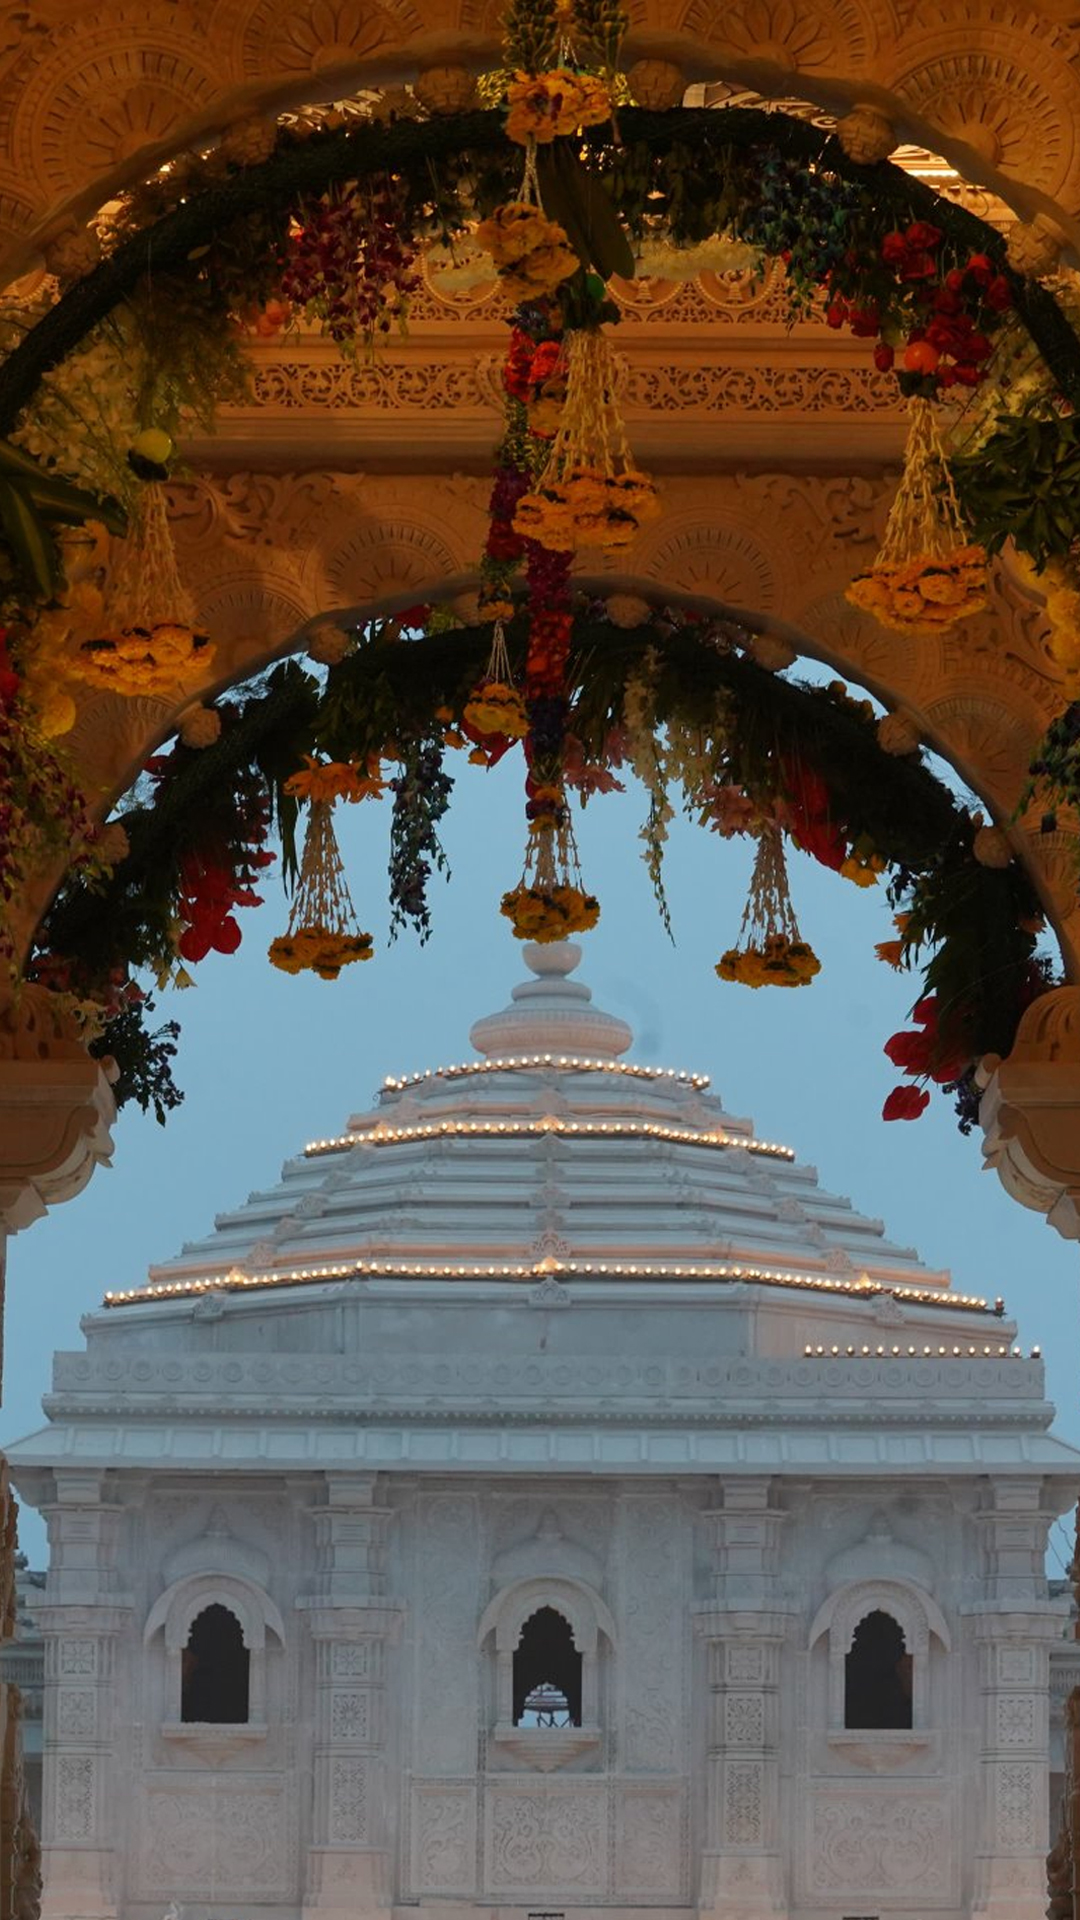 Ram Mandir beautifully decorated, illuminates in saffron lights ahead of 'Pran Pratishtha'